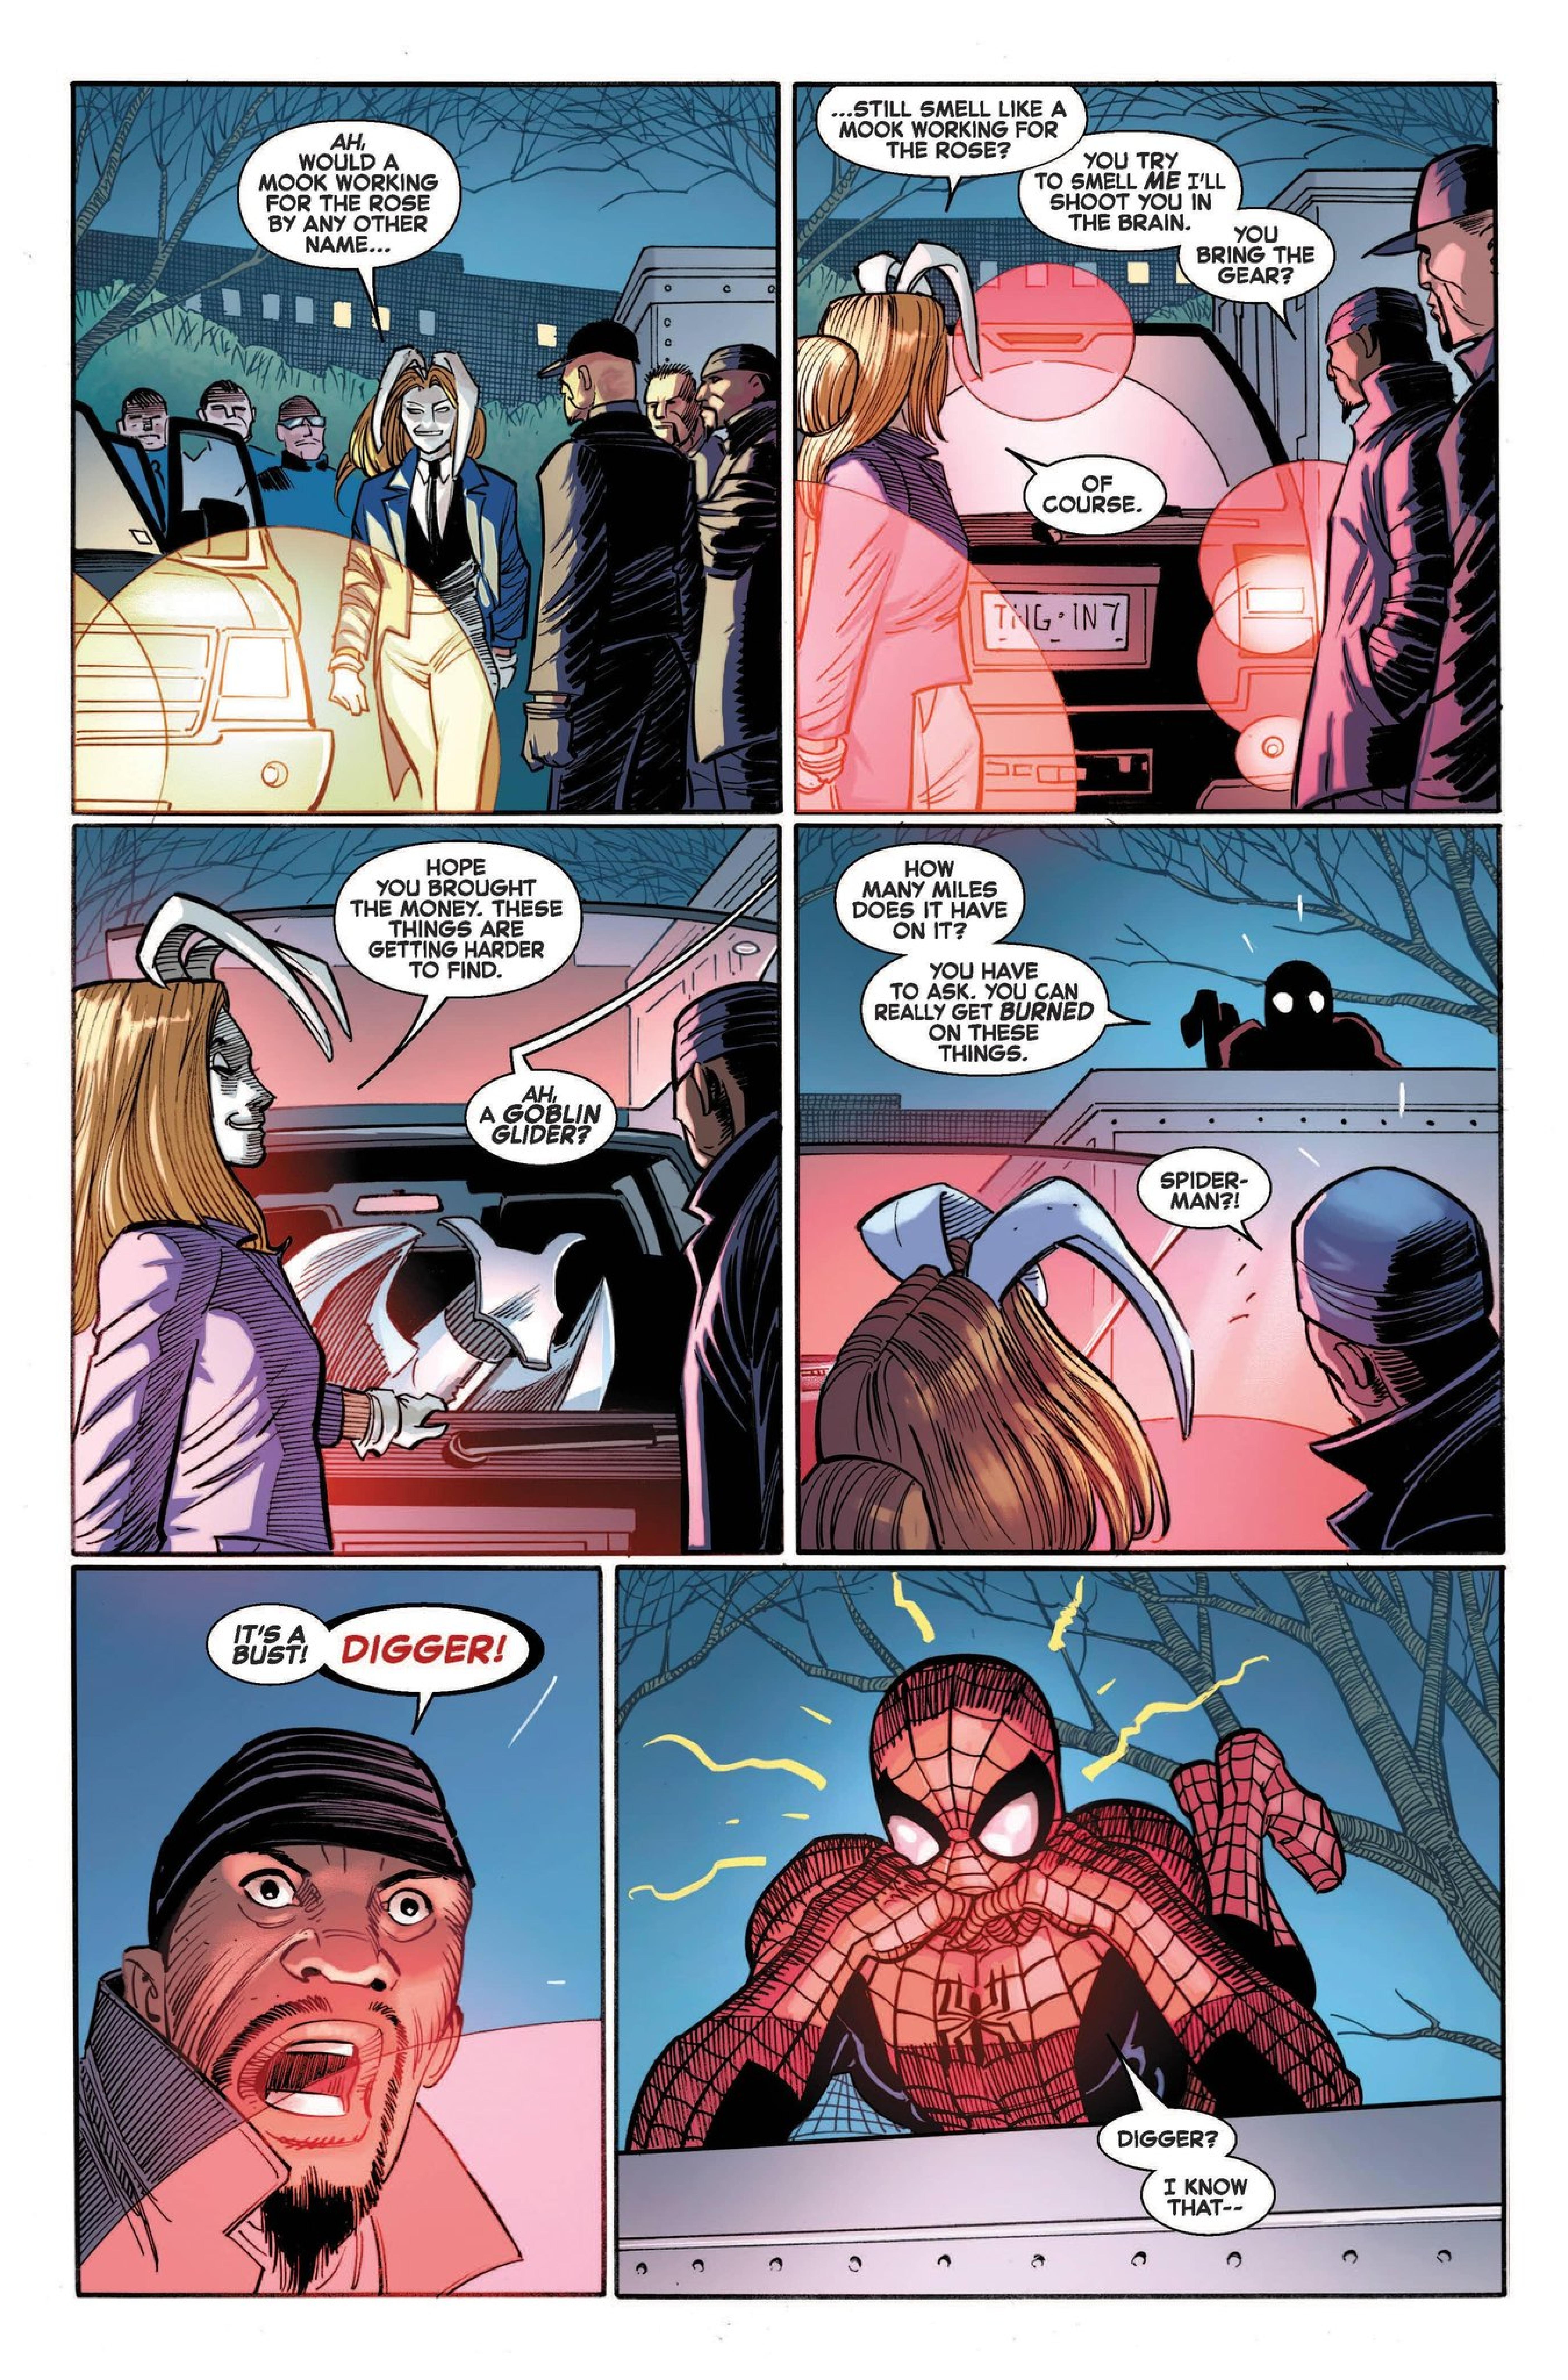 Amazing Spider-Man #1 Bagley Variant (2022)